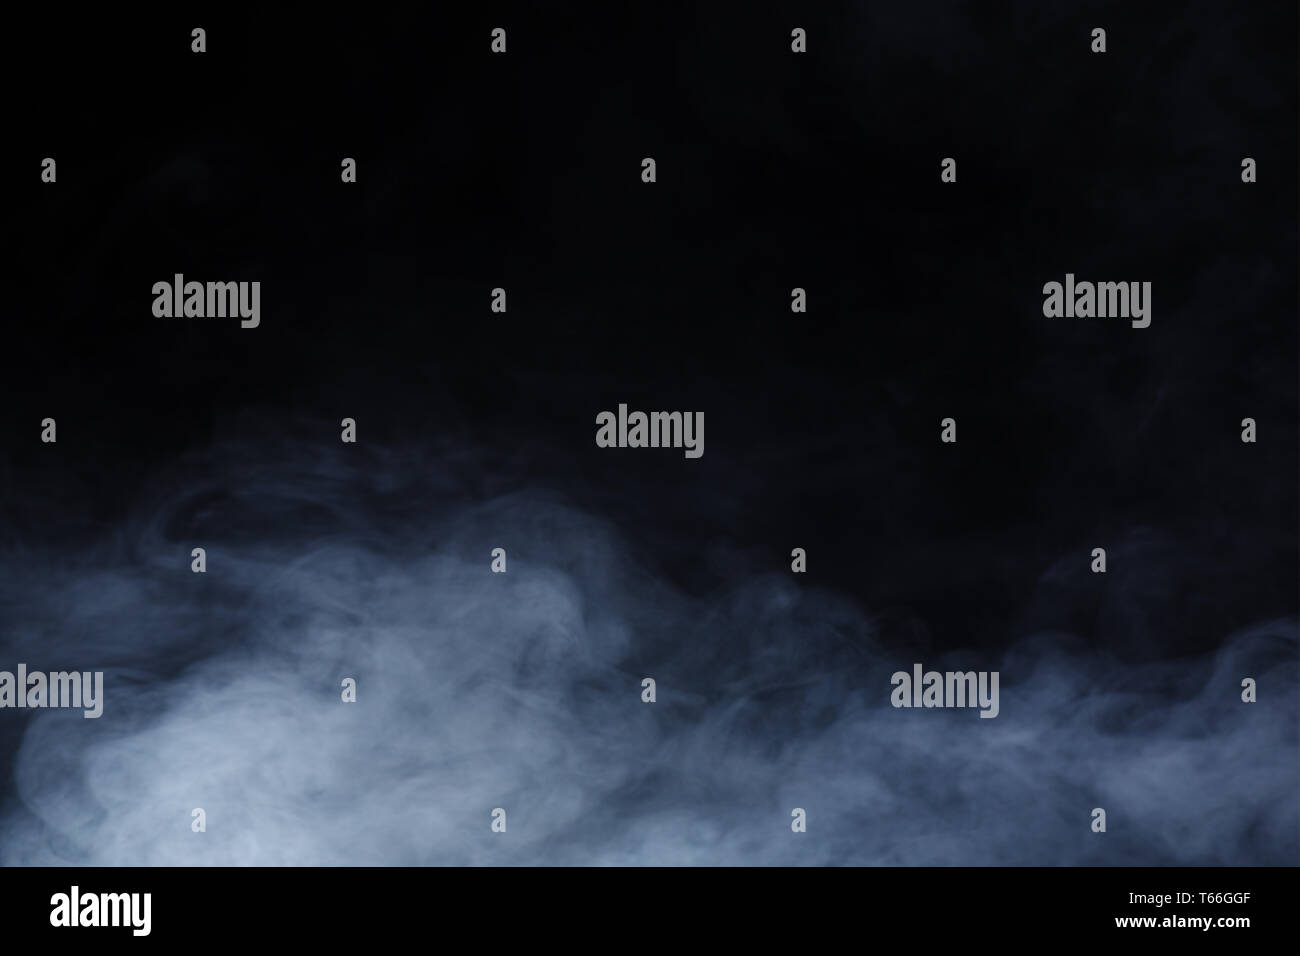 Abstract Smoke on black Background Stock Photo